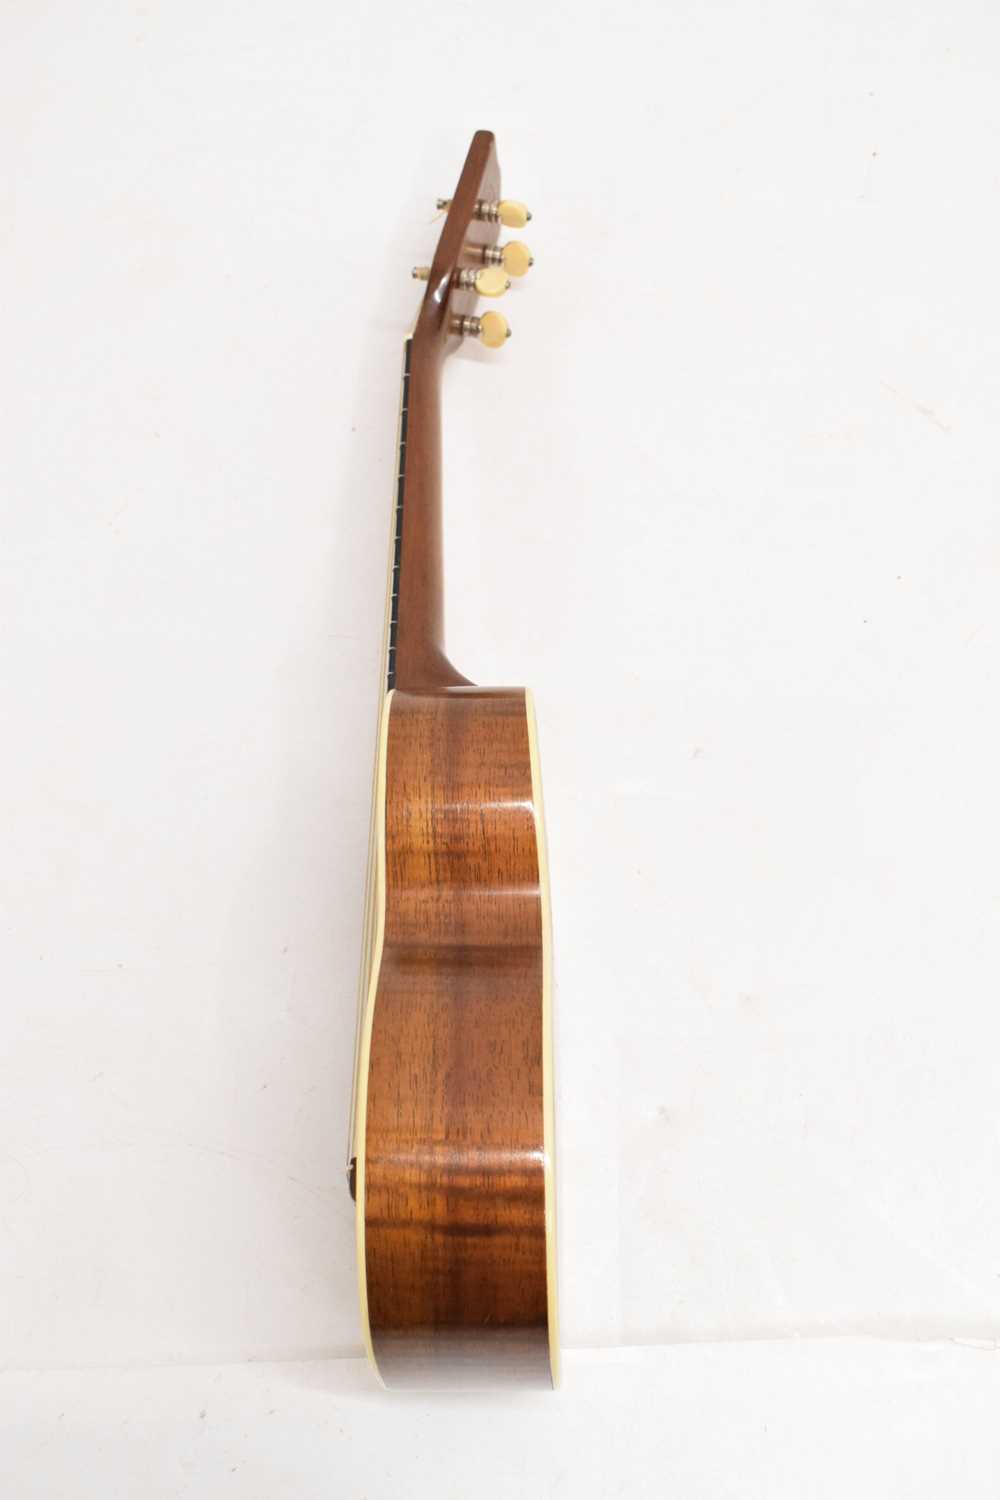 C.F. Martin & Co of Nazareth PA - 4 string Ivorine inlaid ukelele - Image 3 of 6